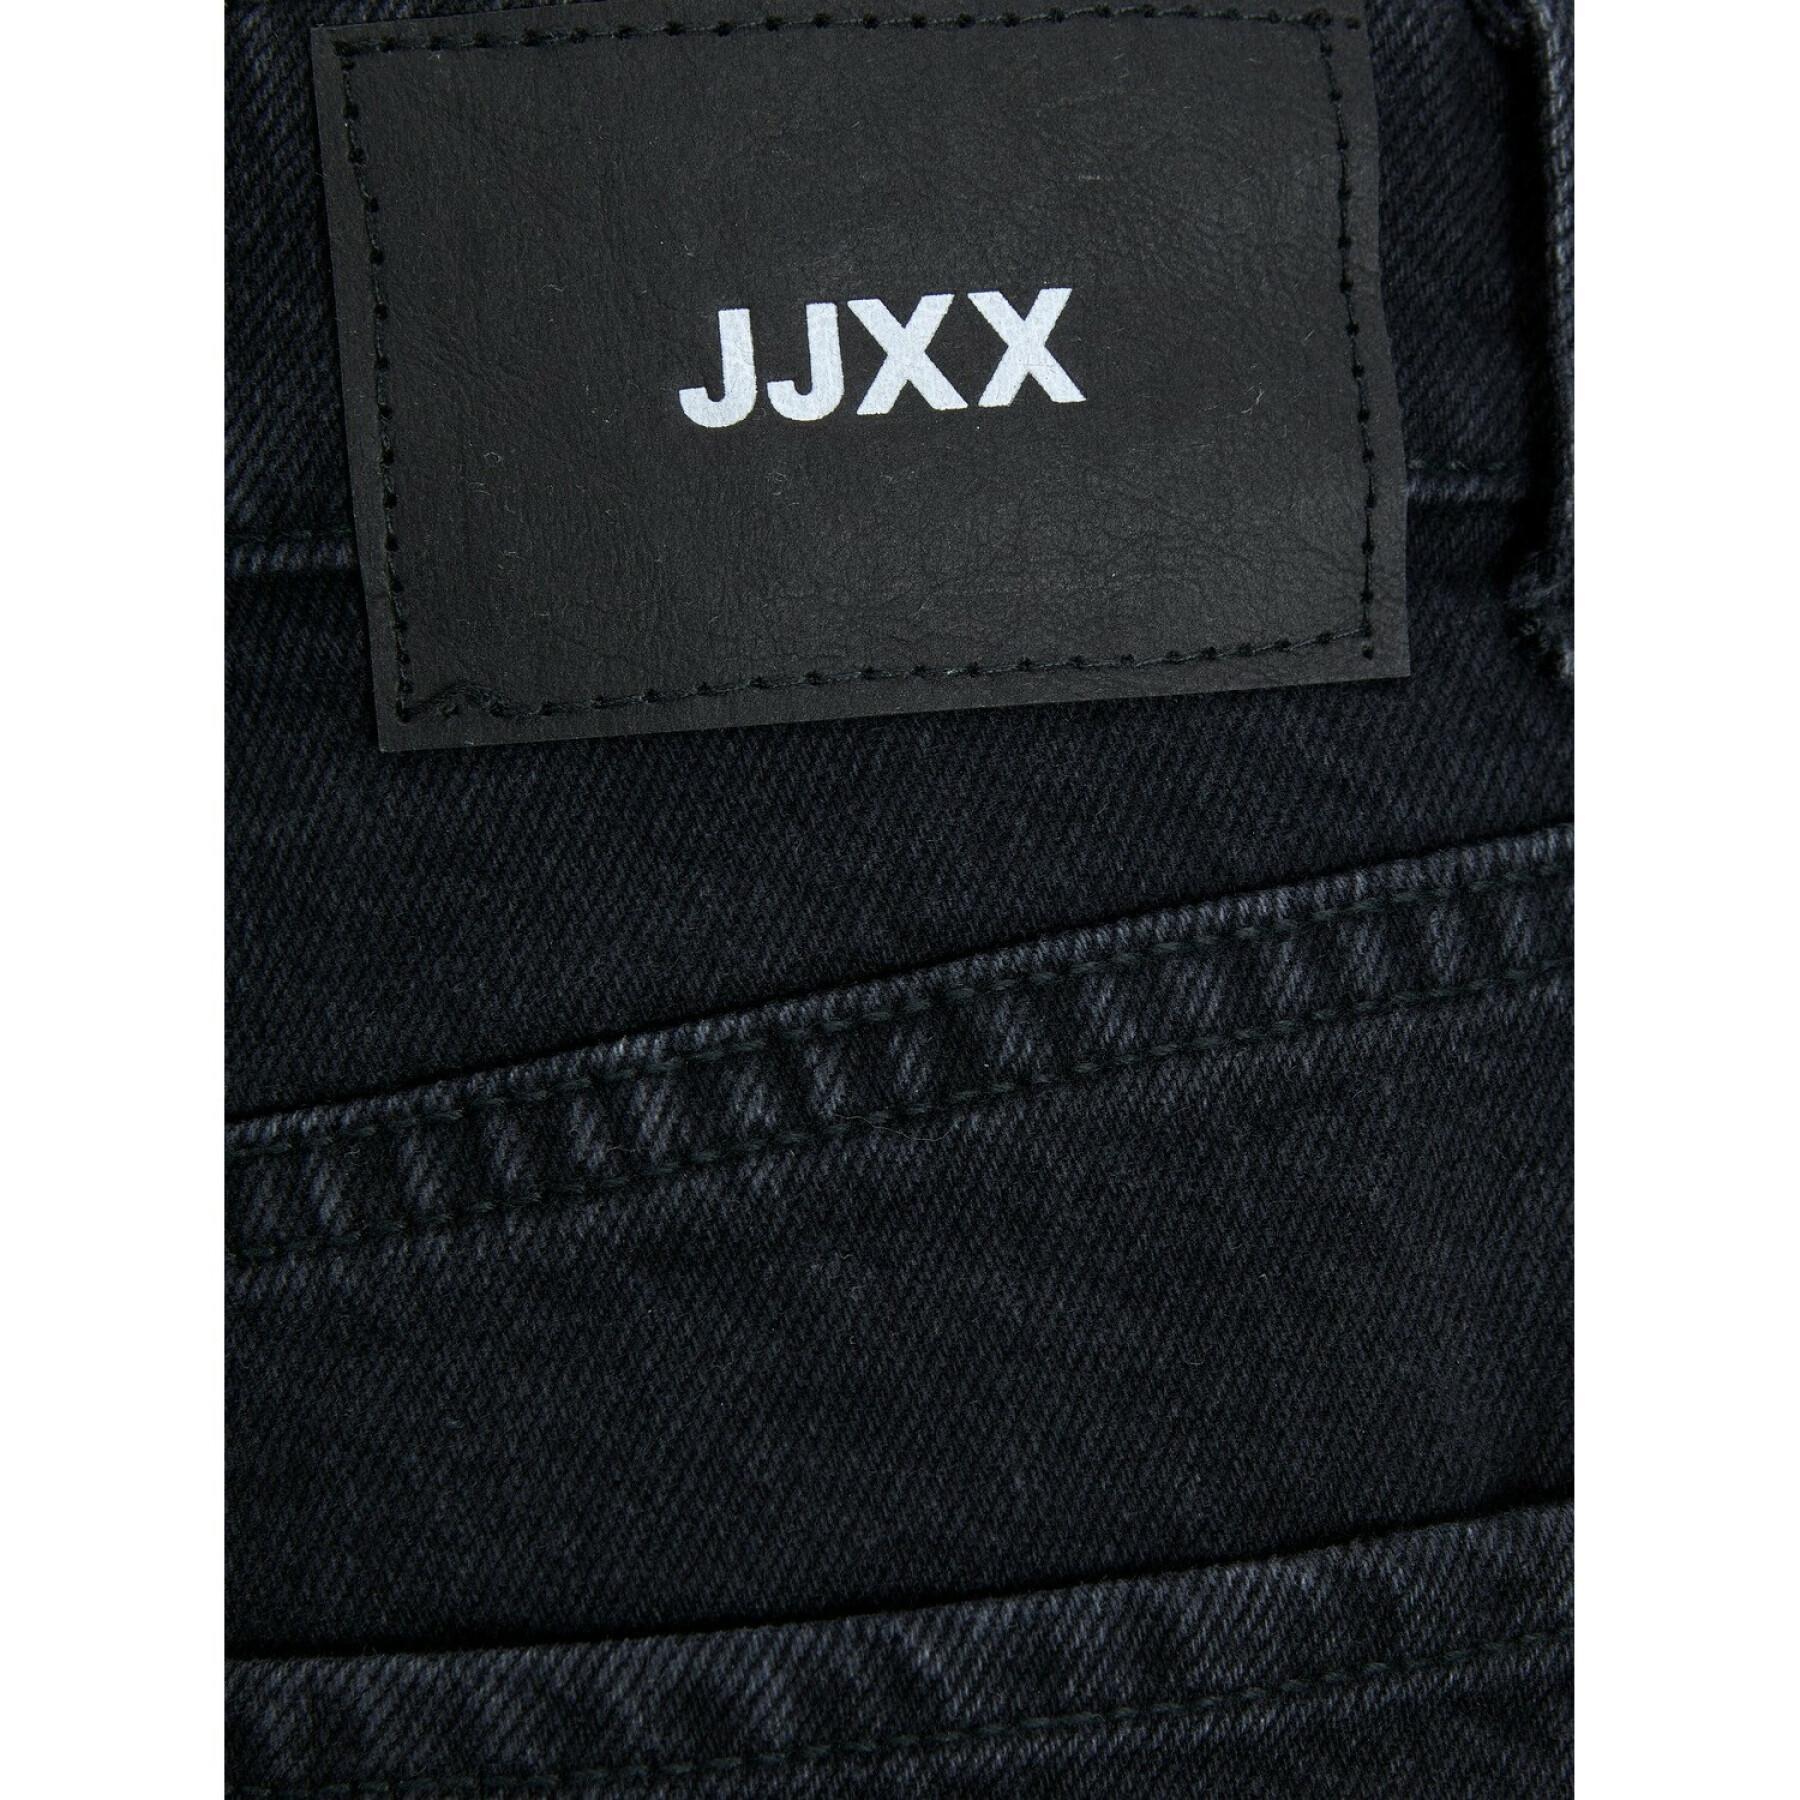 Jeans JJXX tokyo wide nr6004